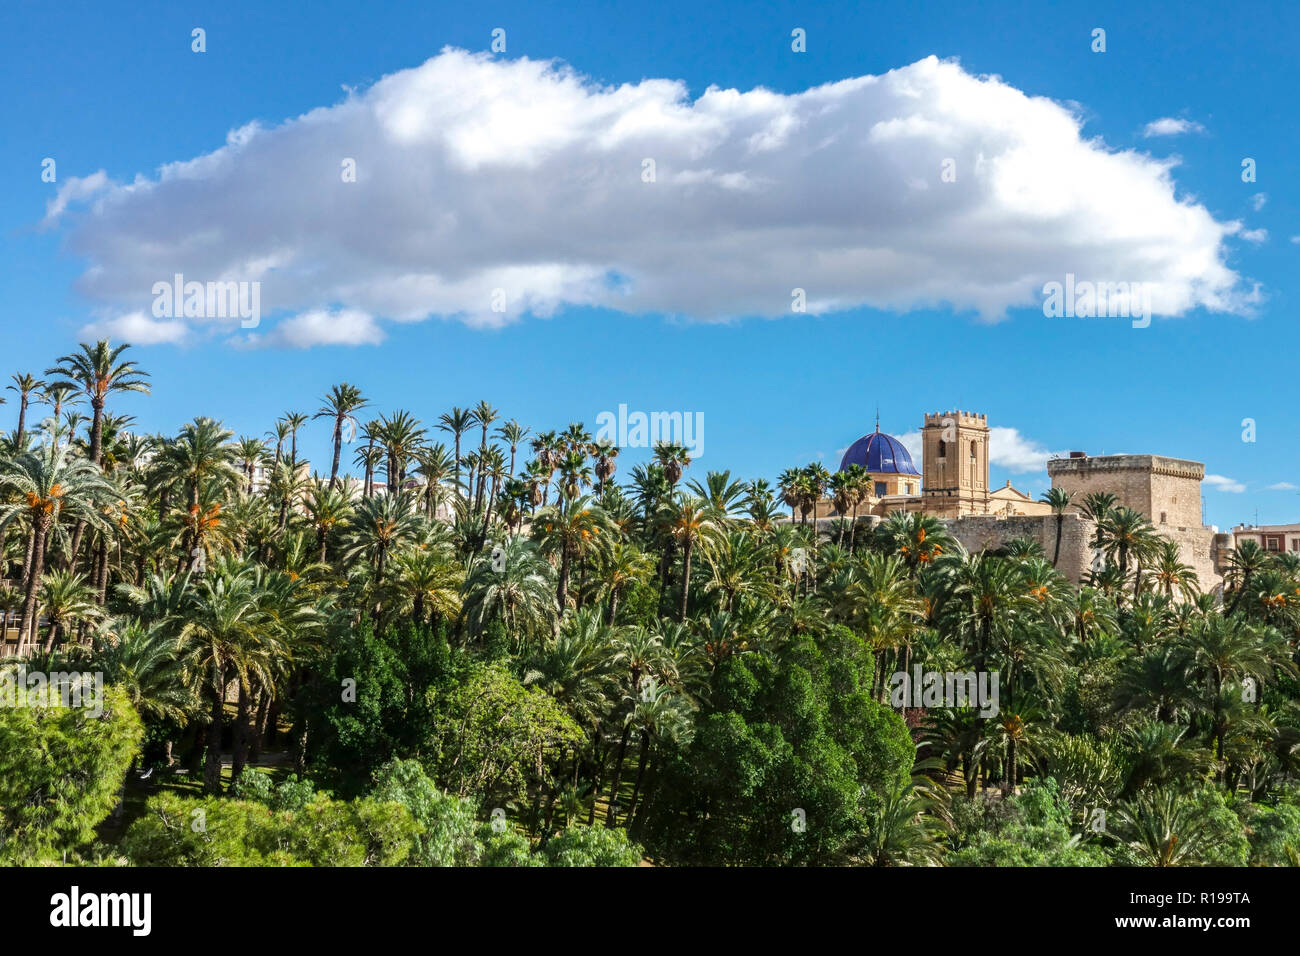 Spanien Elche, Basilica de Santa Maria, Palmen UNESCO Weltkulturerbe, Landschaft Palmeral Elche Spanien Wolke am Himmel Stockfoto